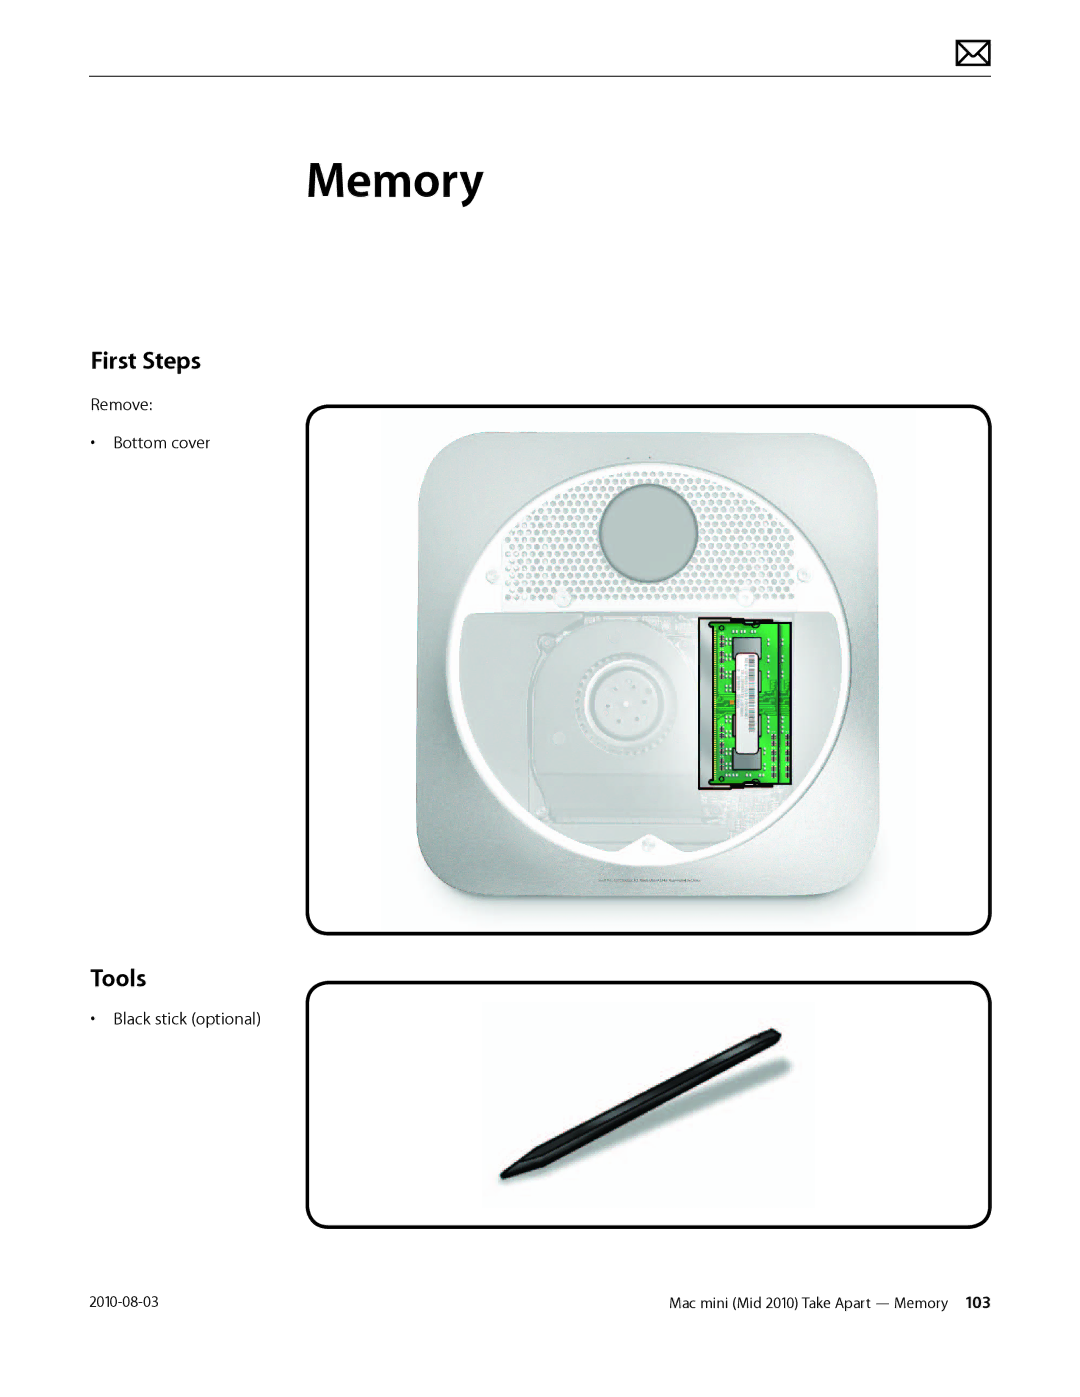 Apple Mac mini manual Memory, First Steps 